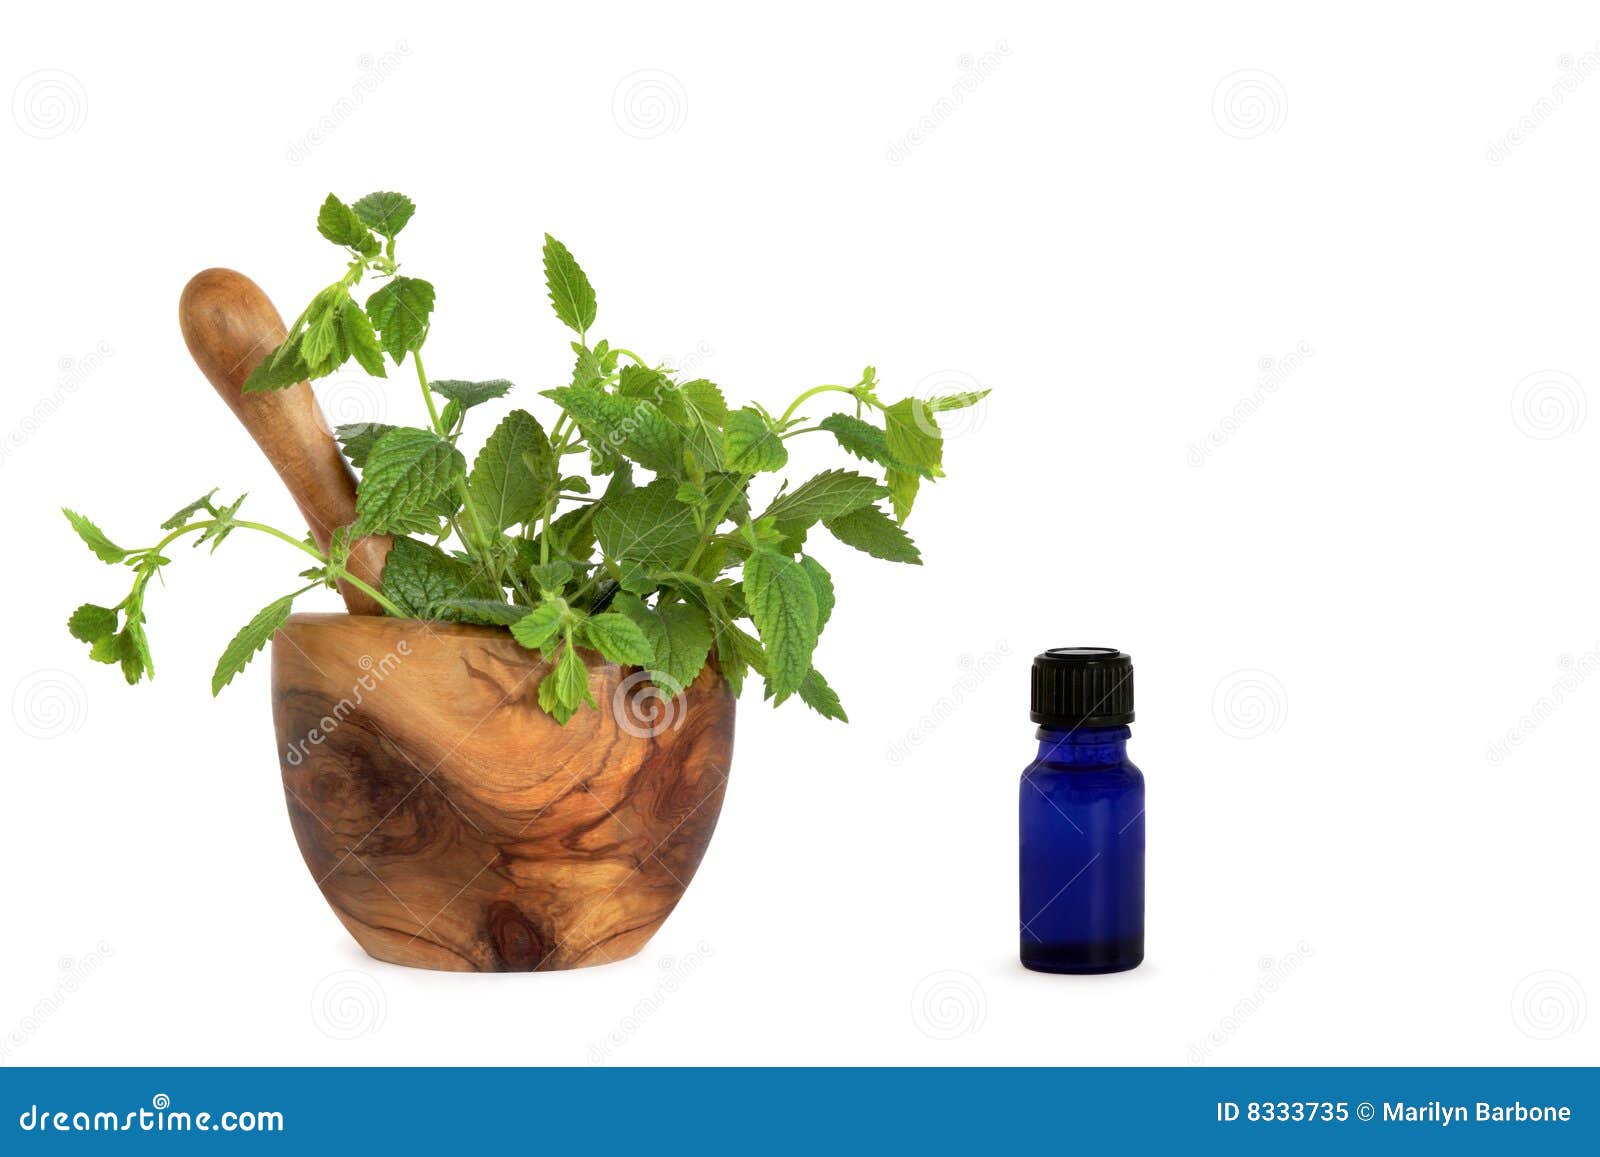 Lemon Balm Essential Oil Herb Stock Image - Image of ingredients